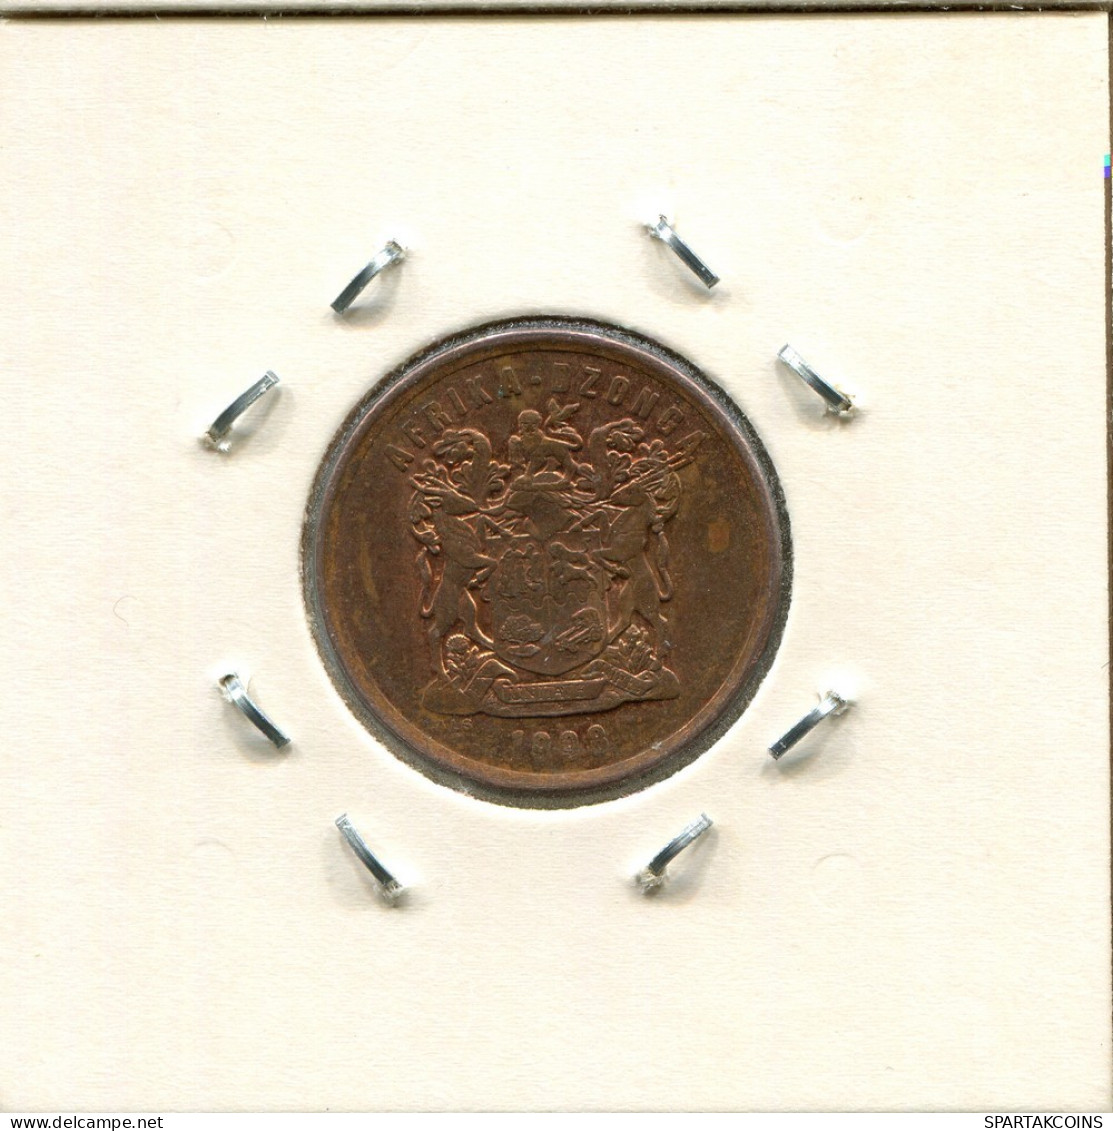 5 CENTS 1998 SUDAFRICA SOUTH AFRICA Moneda #AS301.E.A - Zuid-Afrika